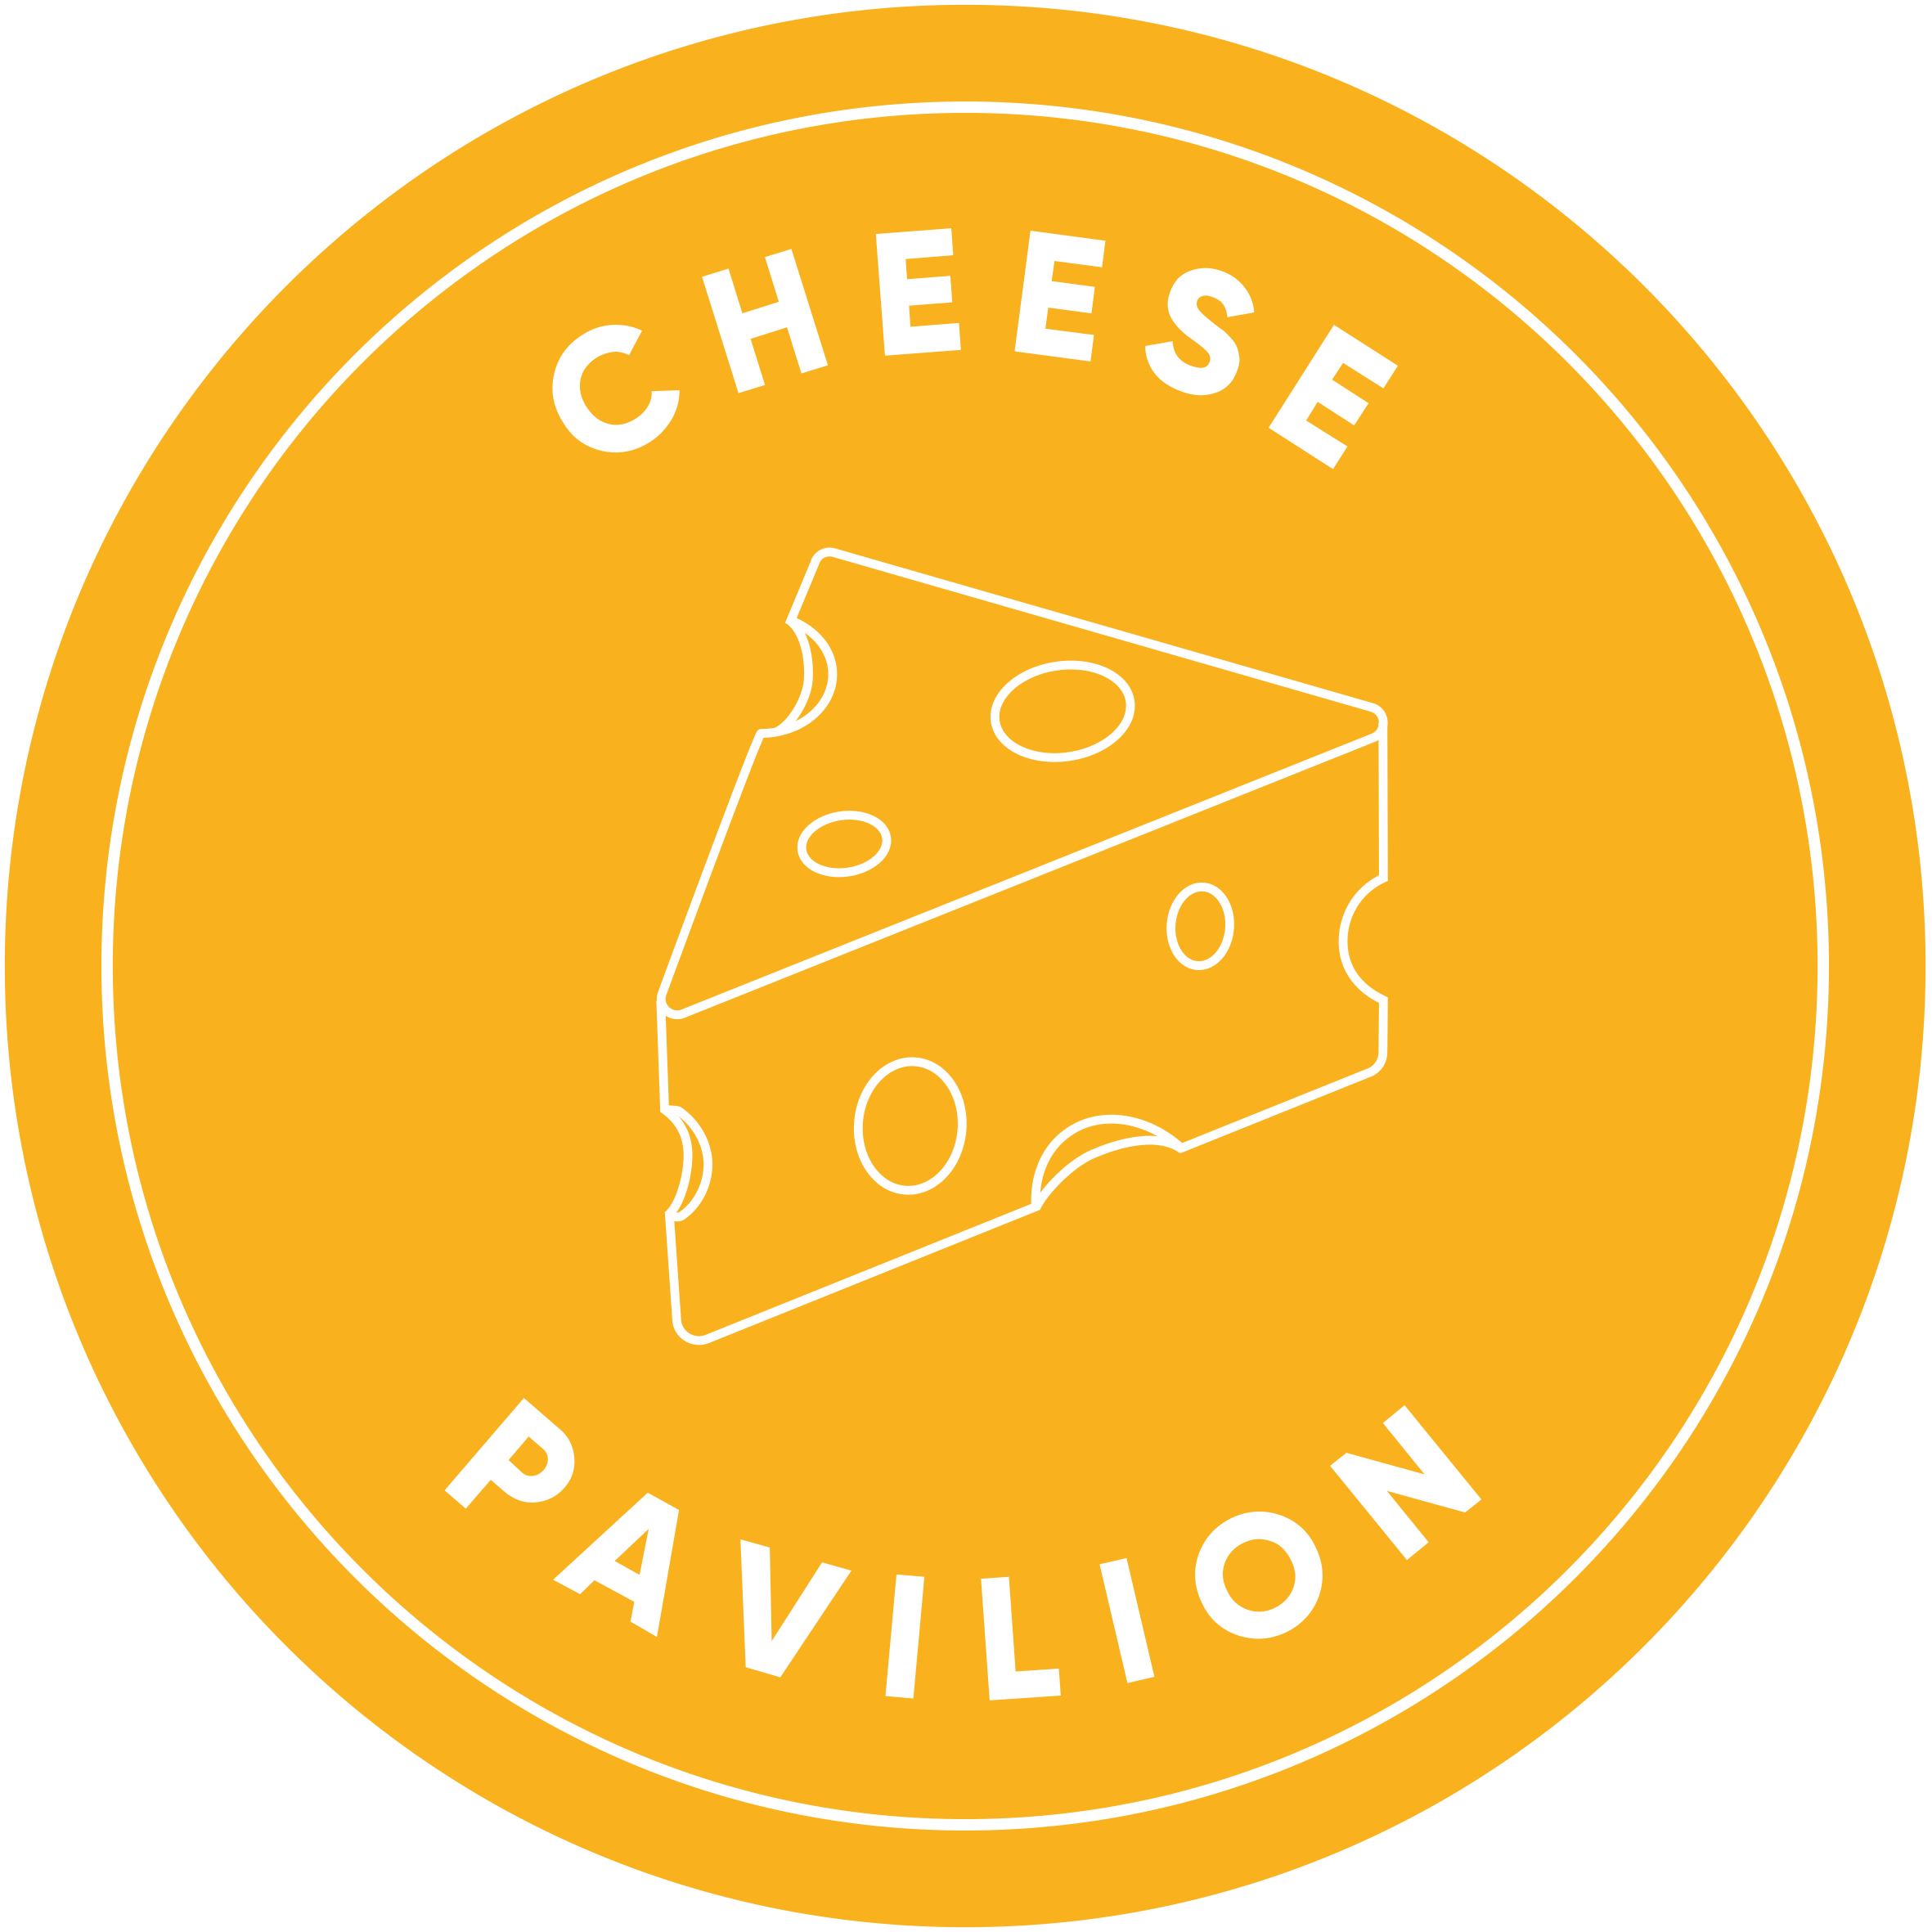 Cheese Pavilion